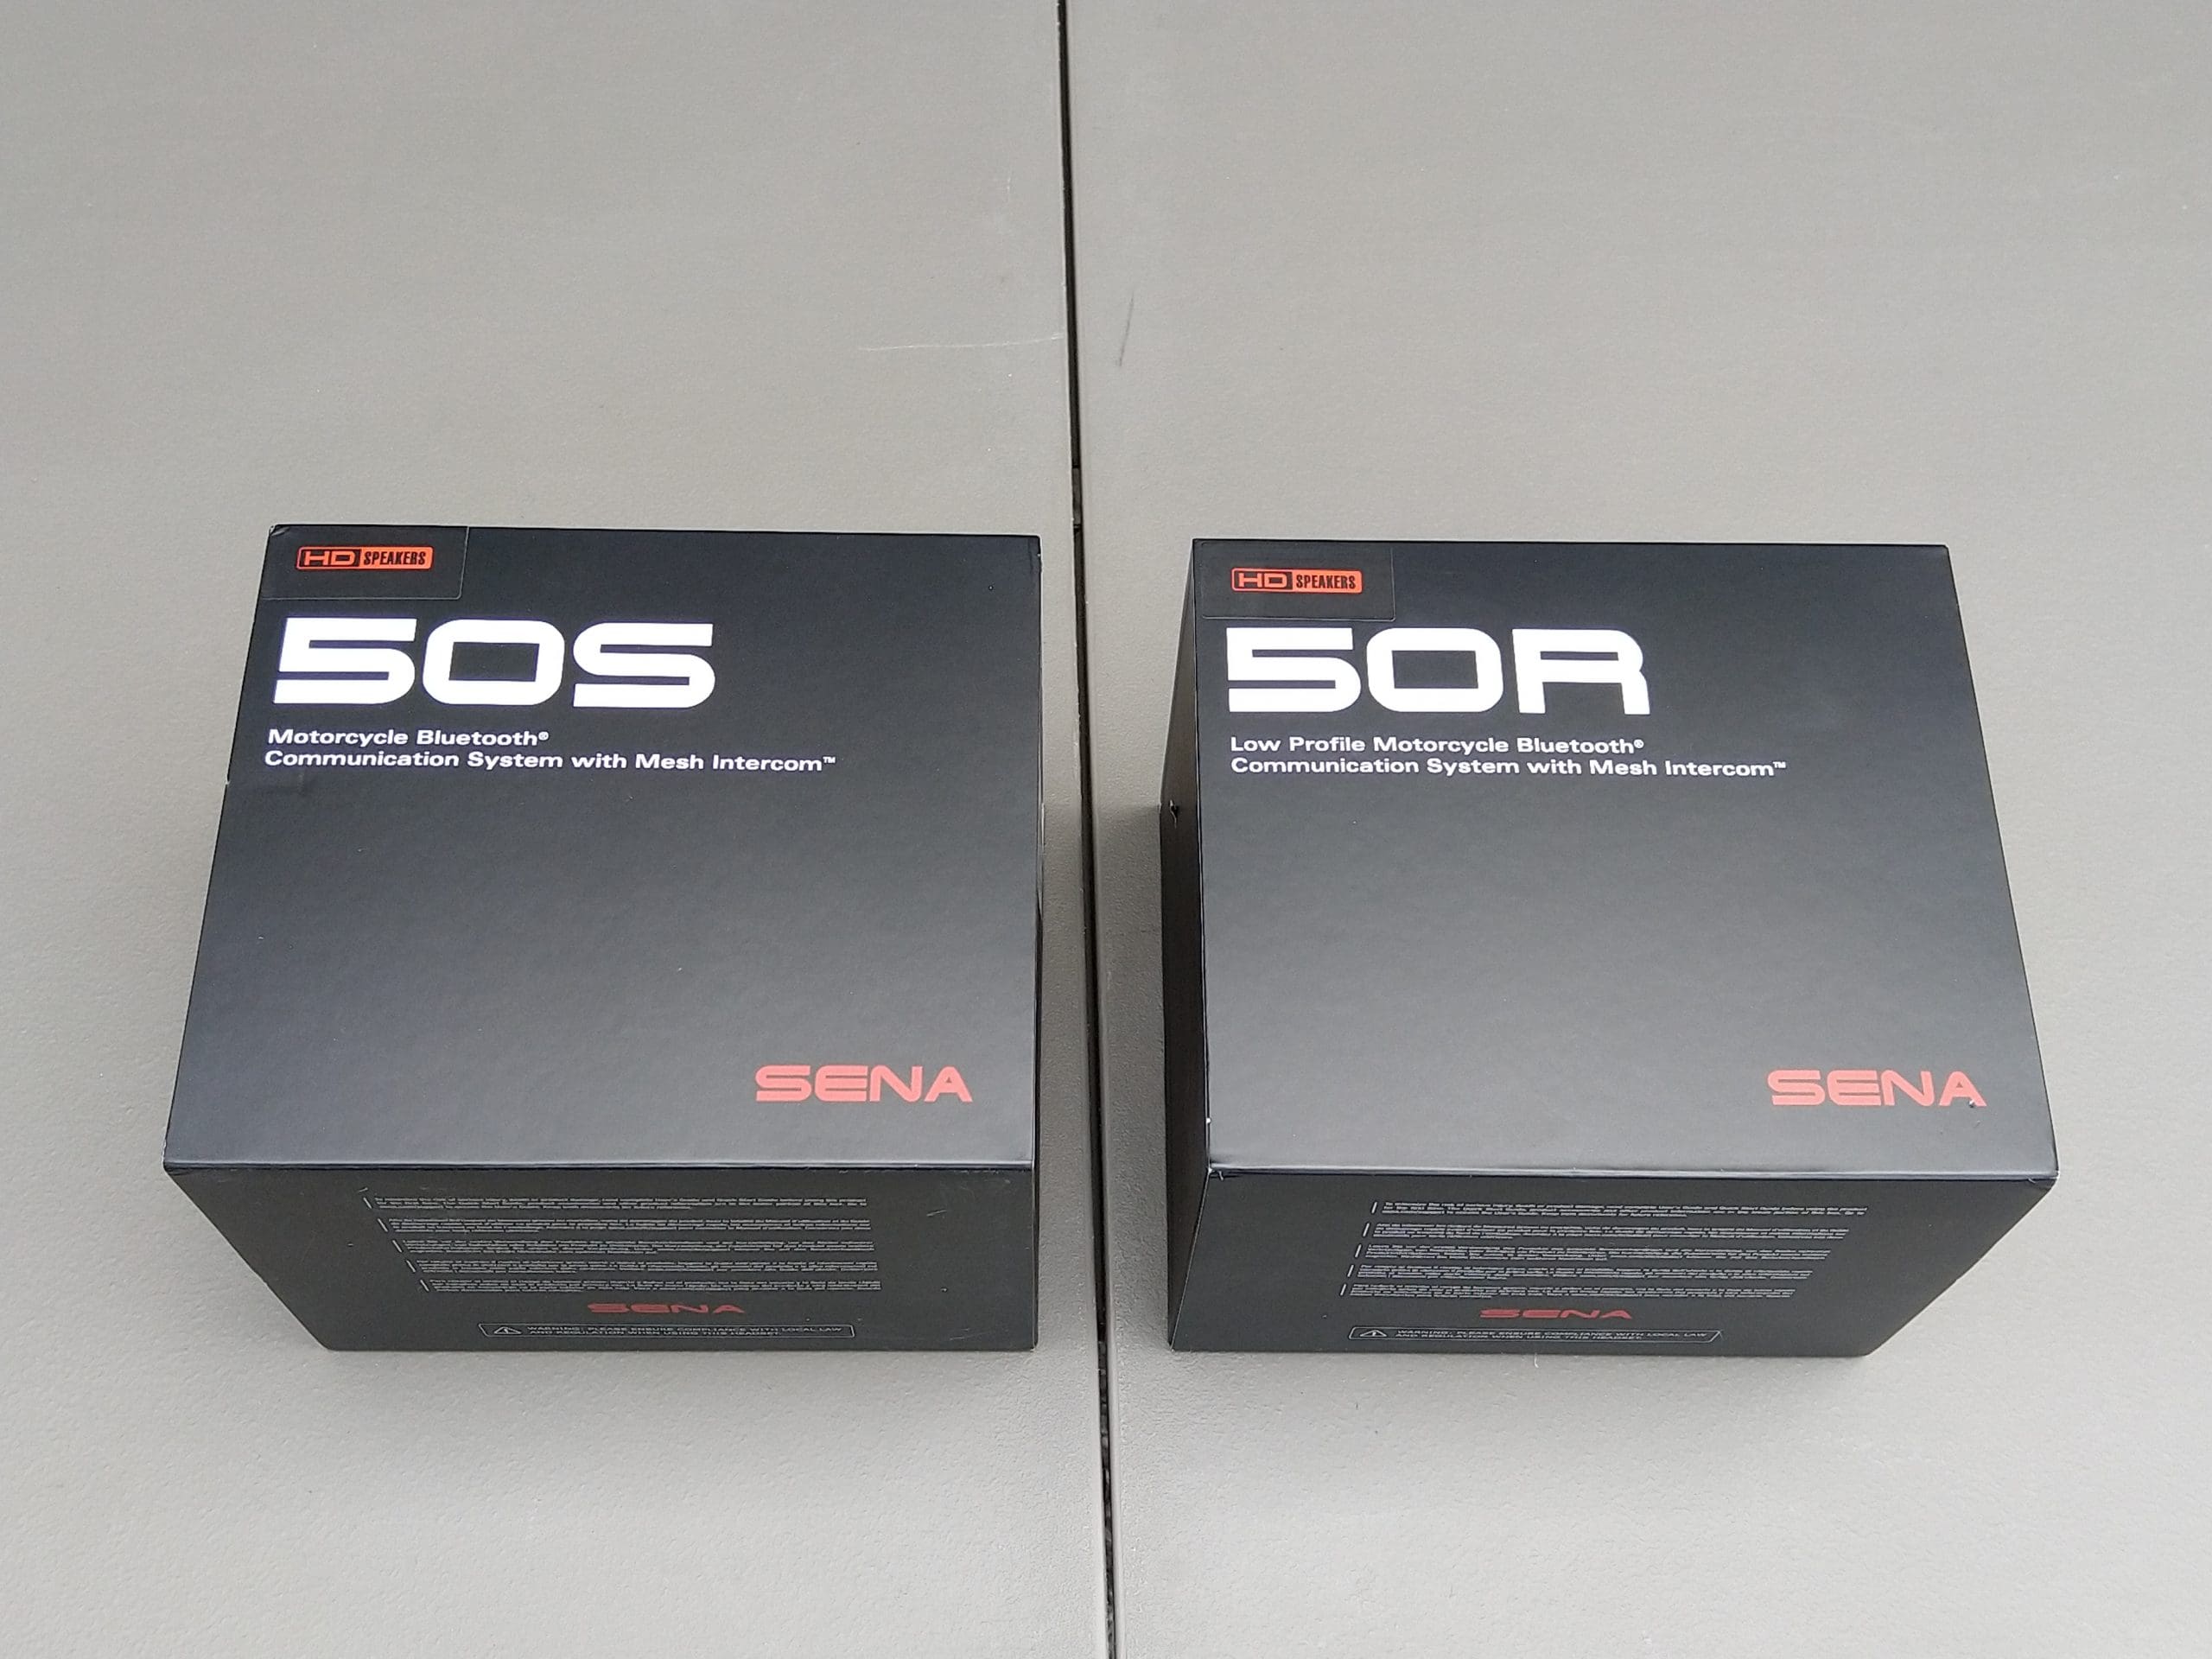 Sena 50R and 50S First Look: Mesh 2.0 Motorcycle Intercom